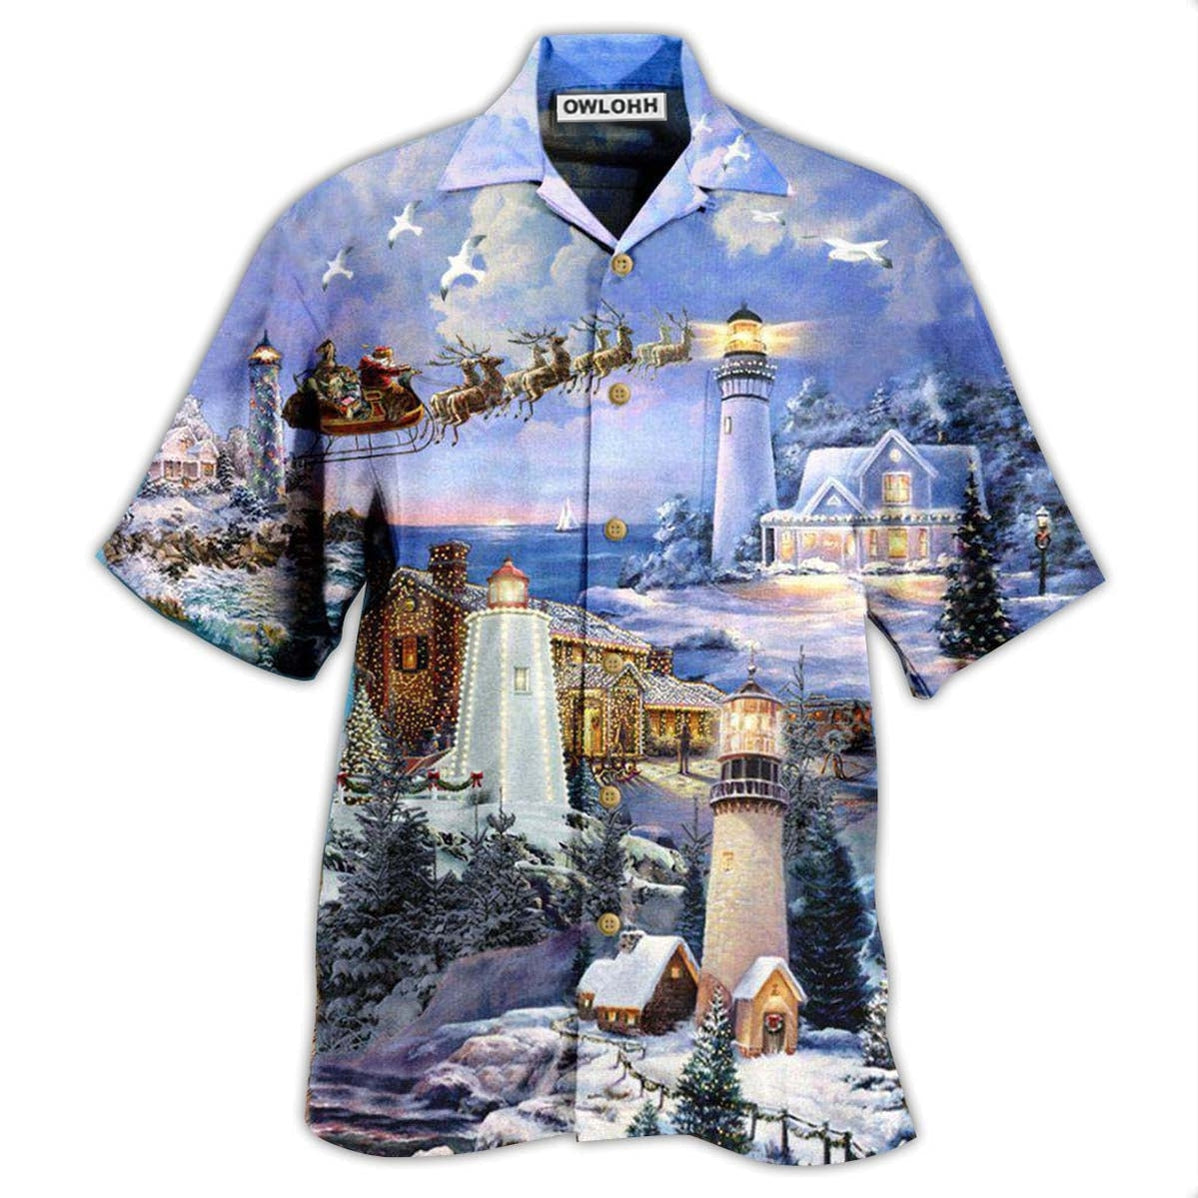 Hawaiian Shirt / Adults / S Lighthouse The Magical Lighthouse - Hawaiian Shirt - Owls Matrix LTD